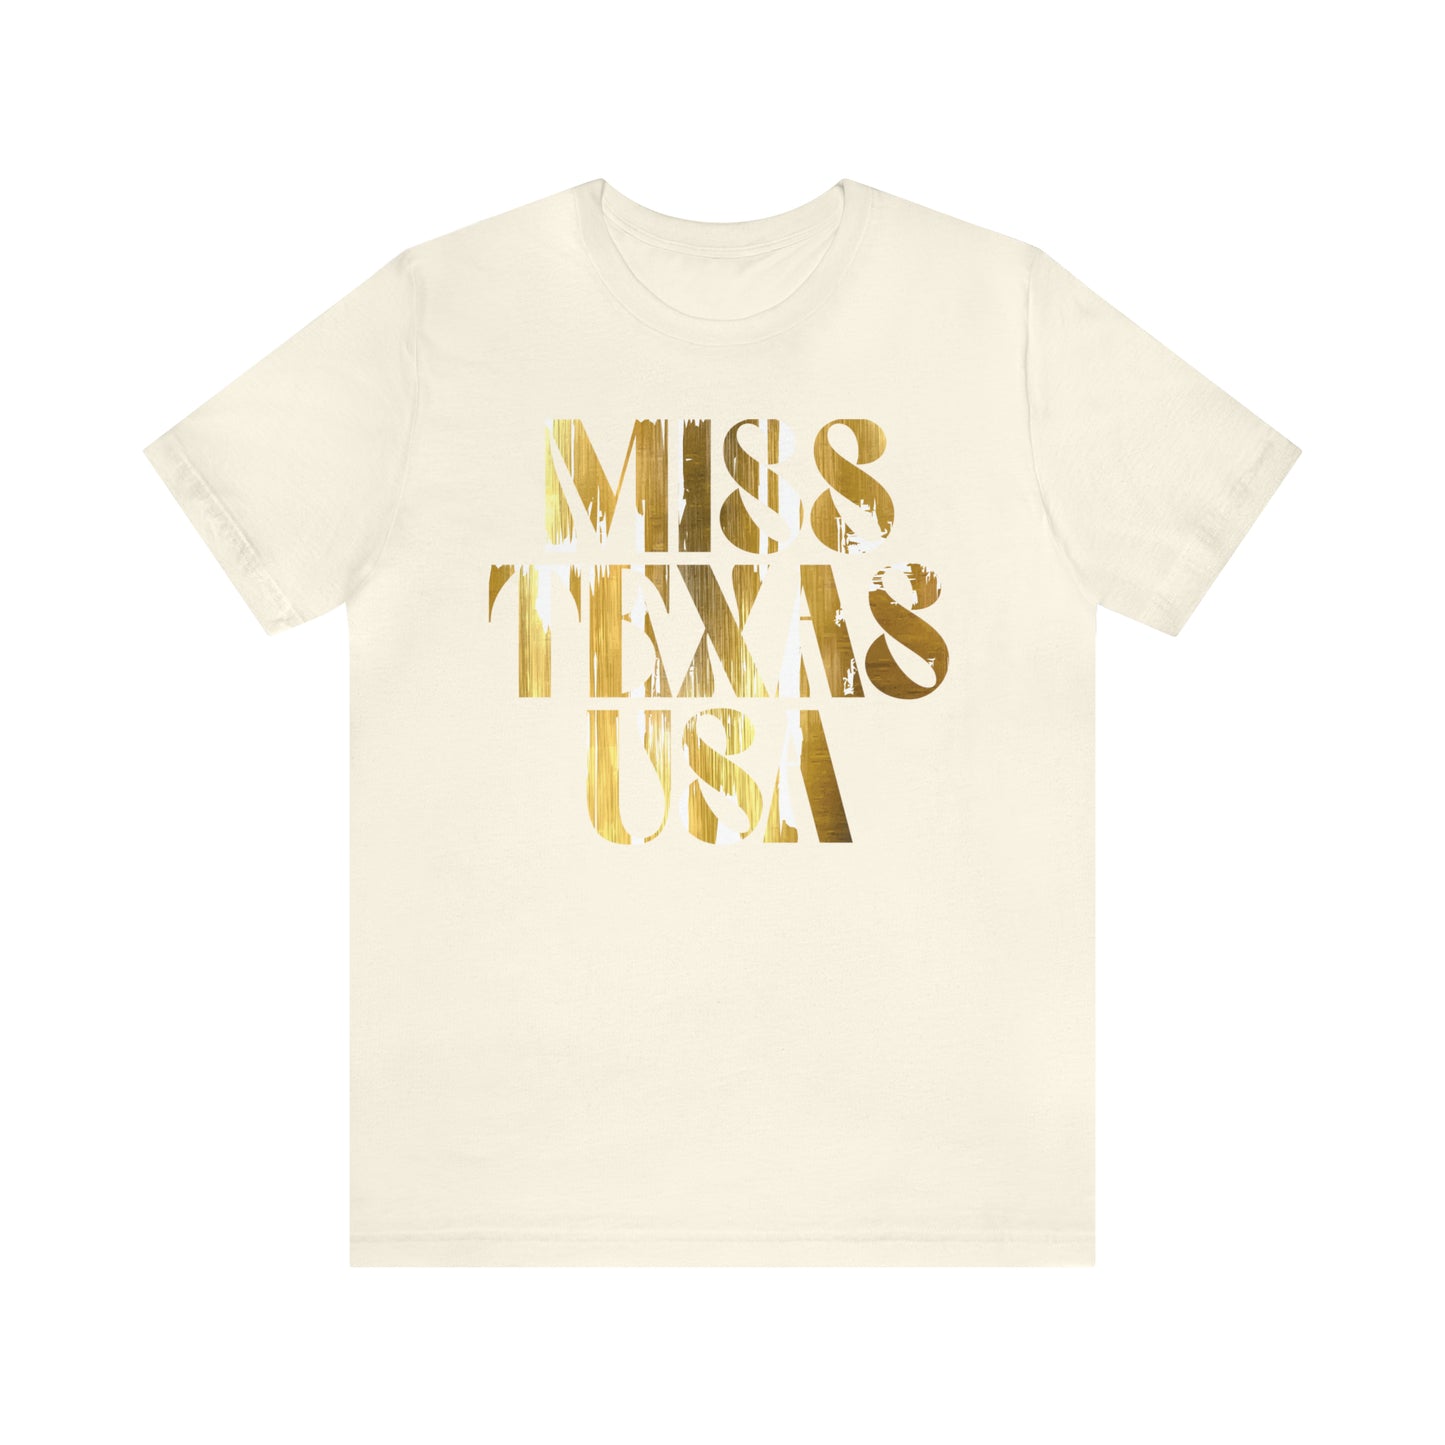 "Texas Gold Dos" T-shirt - Miss Texas USA